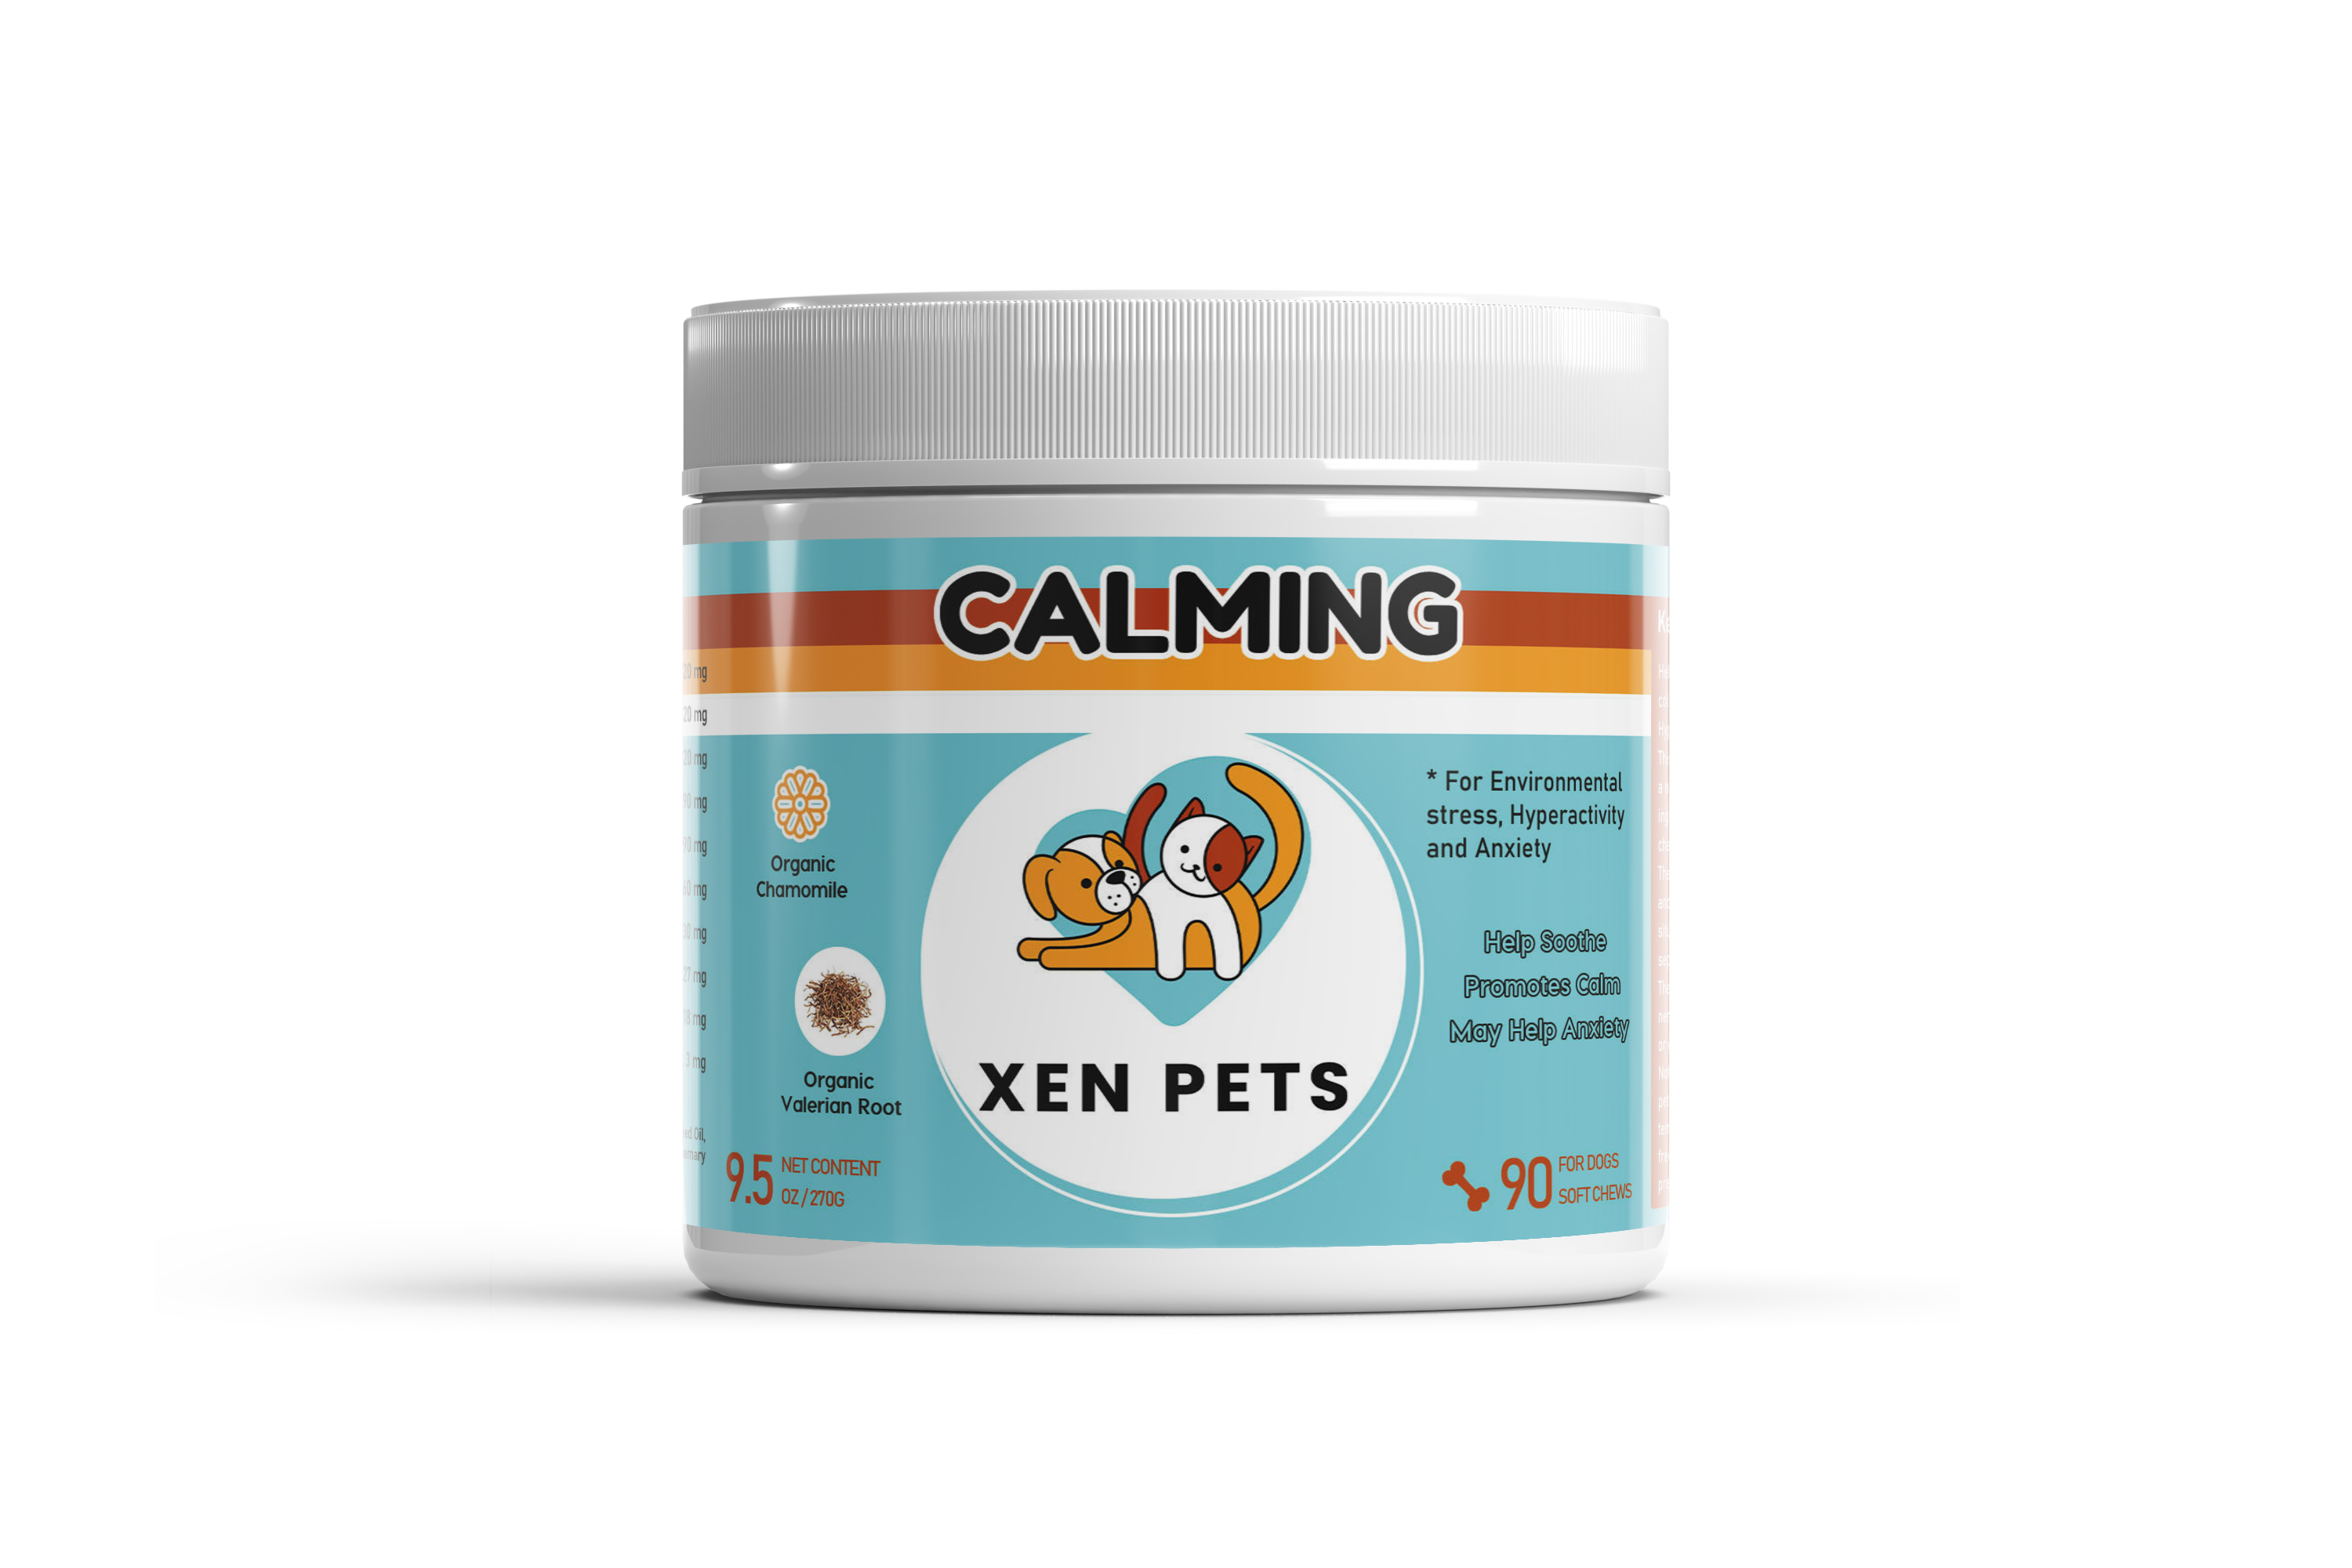 Xen Pets calming treats for dogs